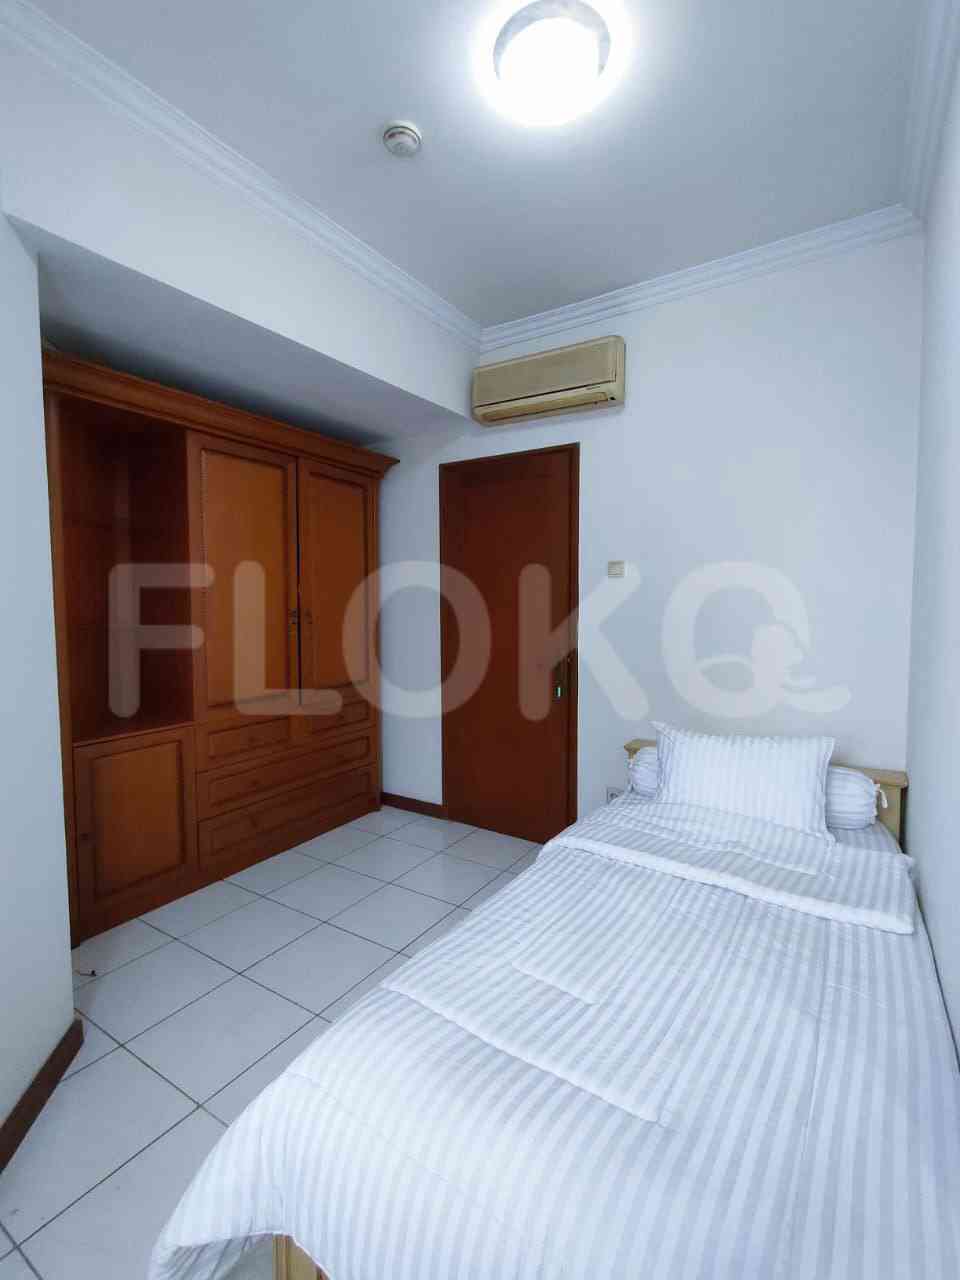 2 Bedroom on 12th Floor for Rent in Aryaduta Suites Semanggi - fsu0f7 3